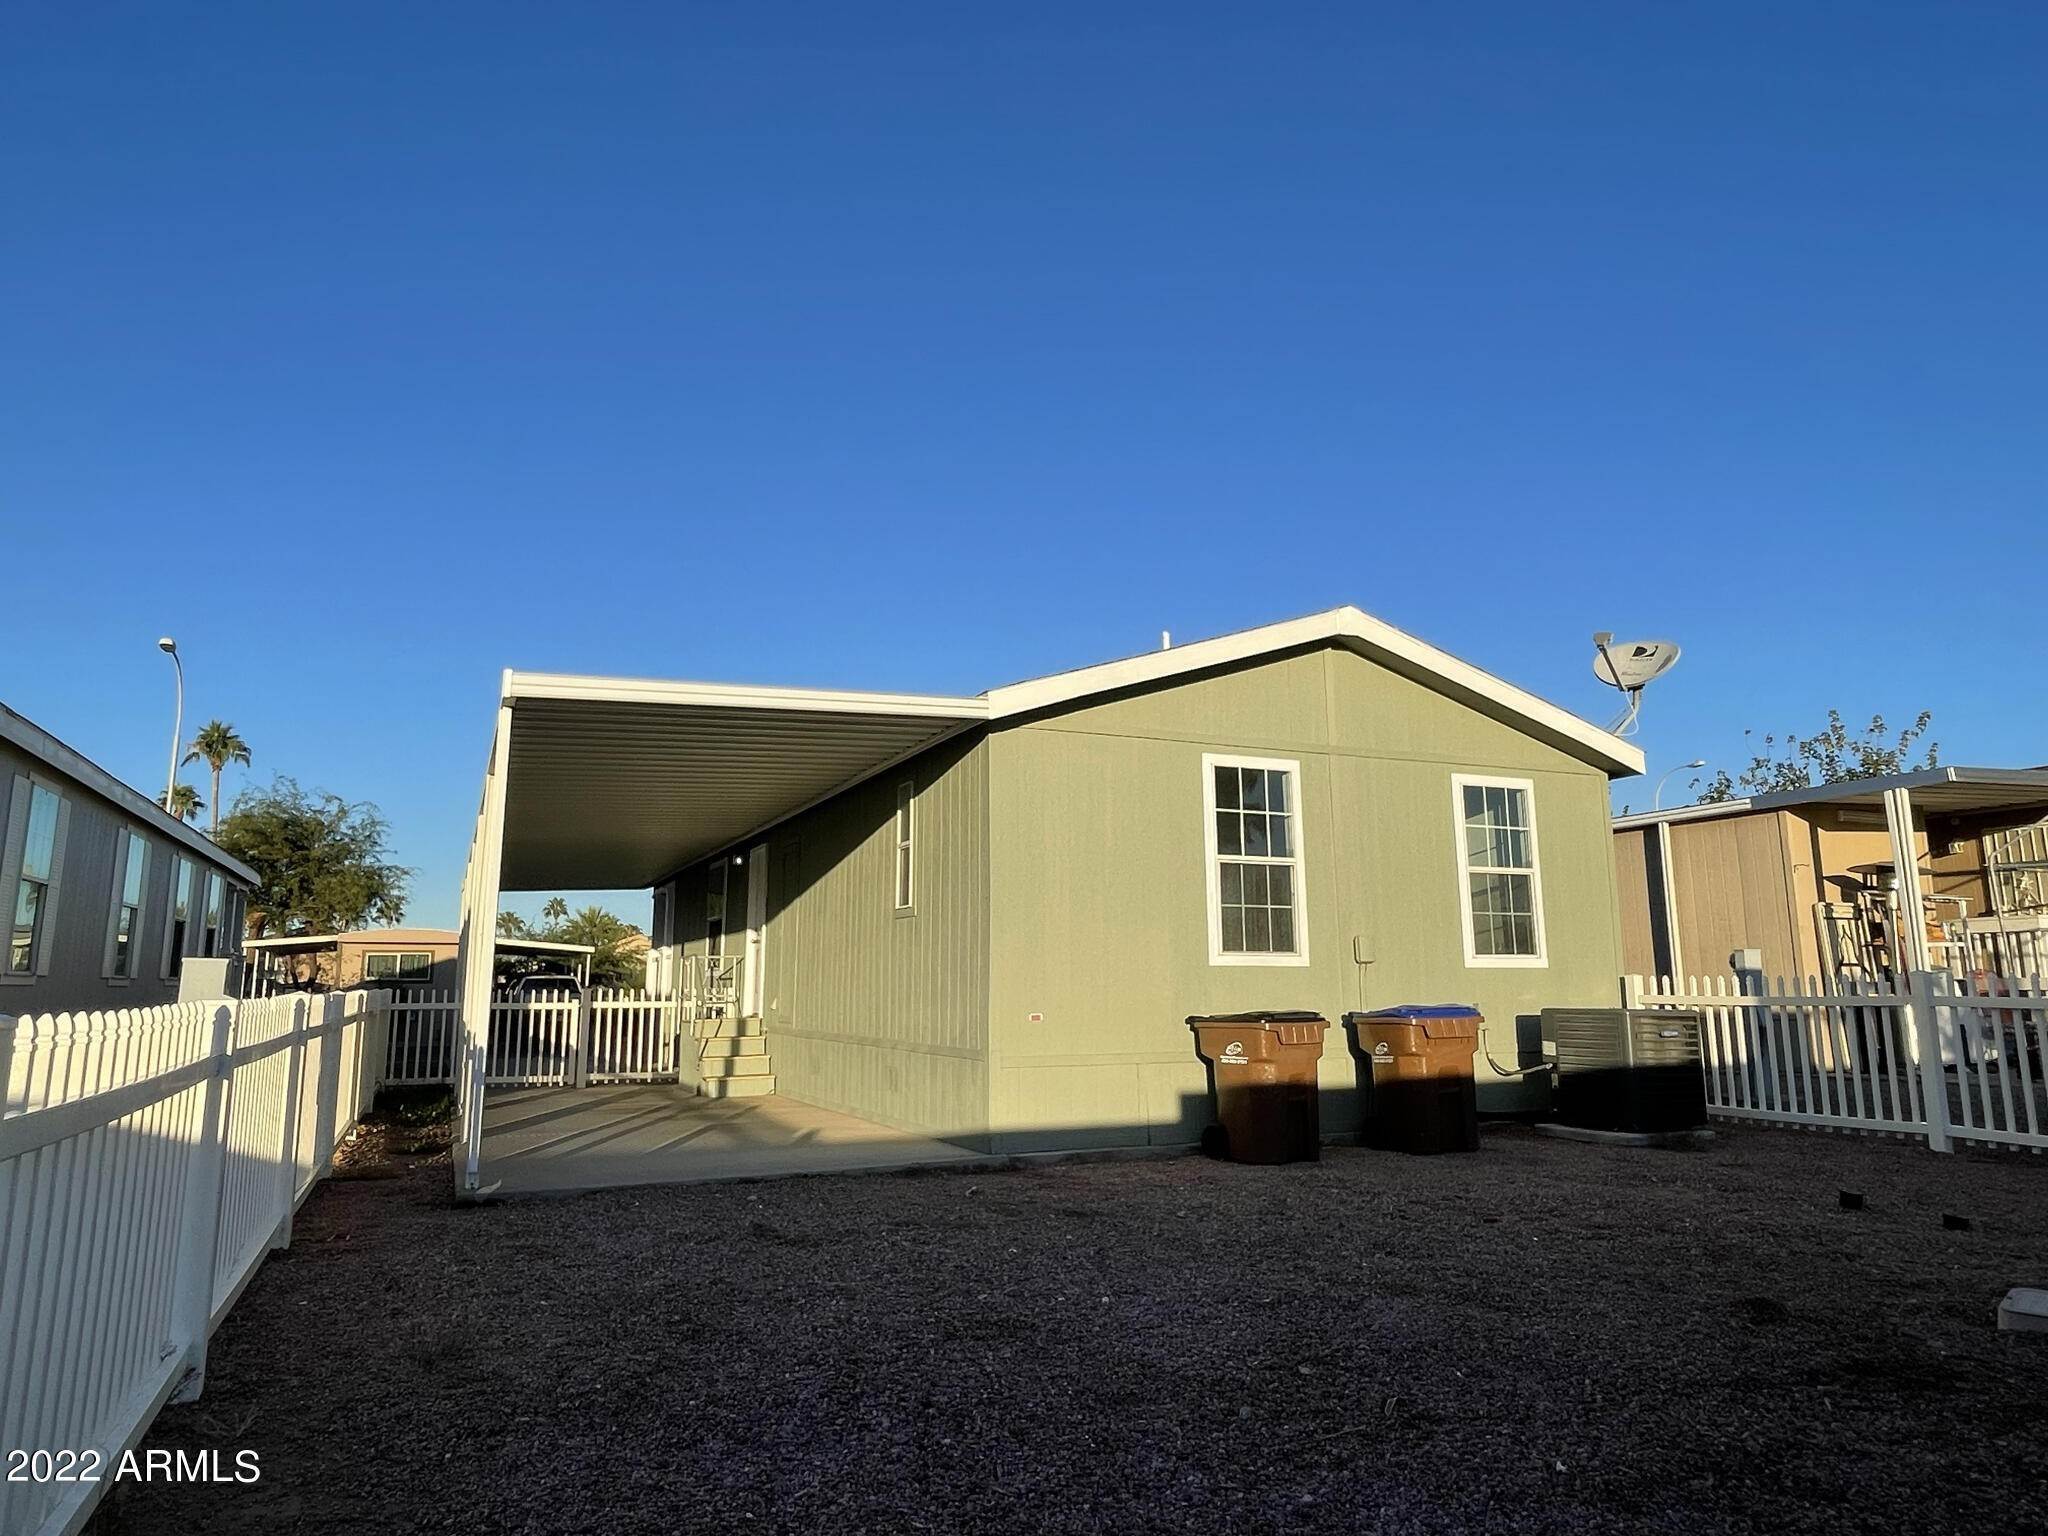 3. Mobile Home for Sale at Mesa, AZ 85208